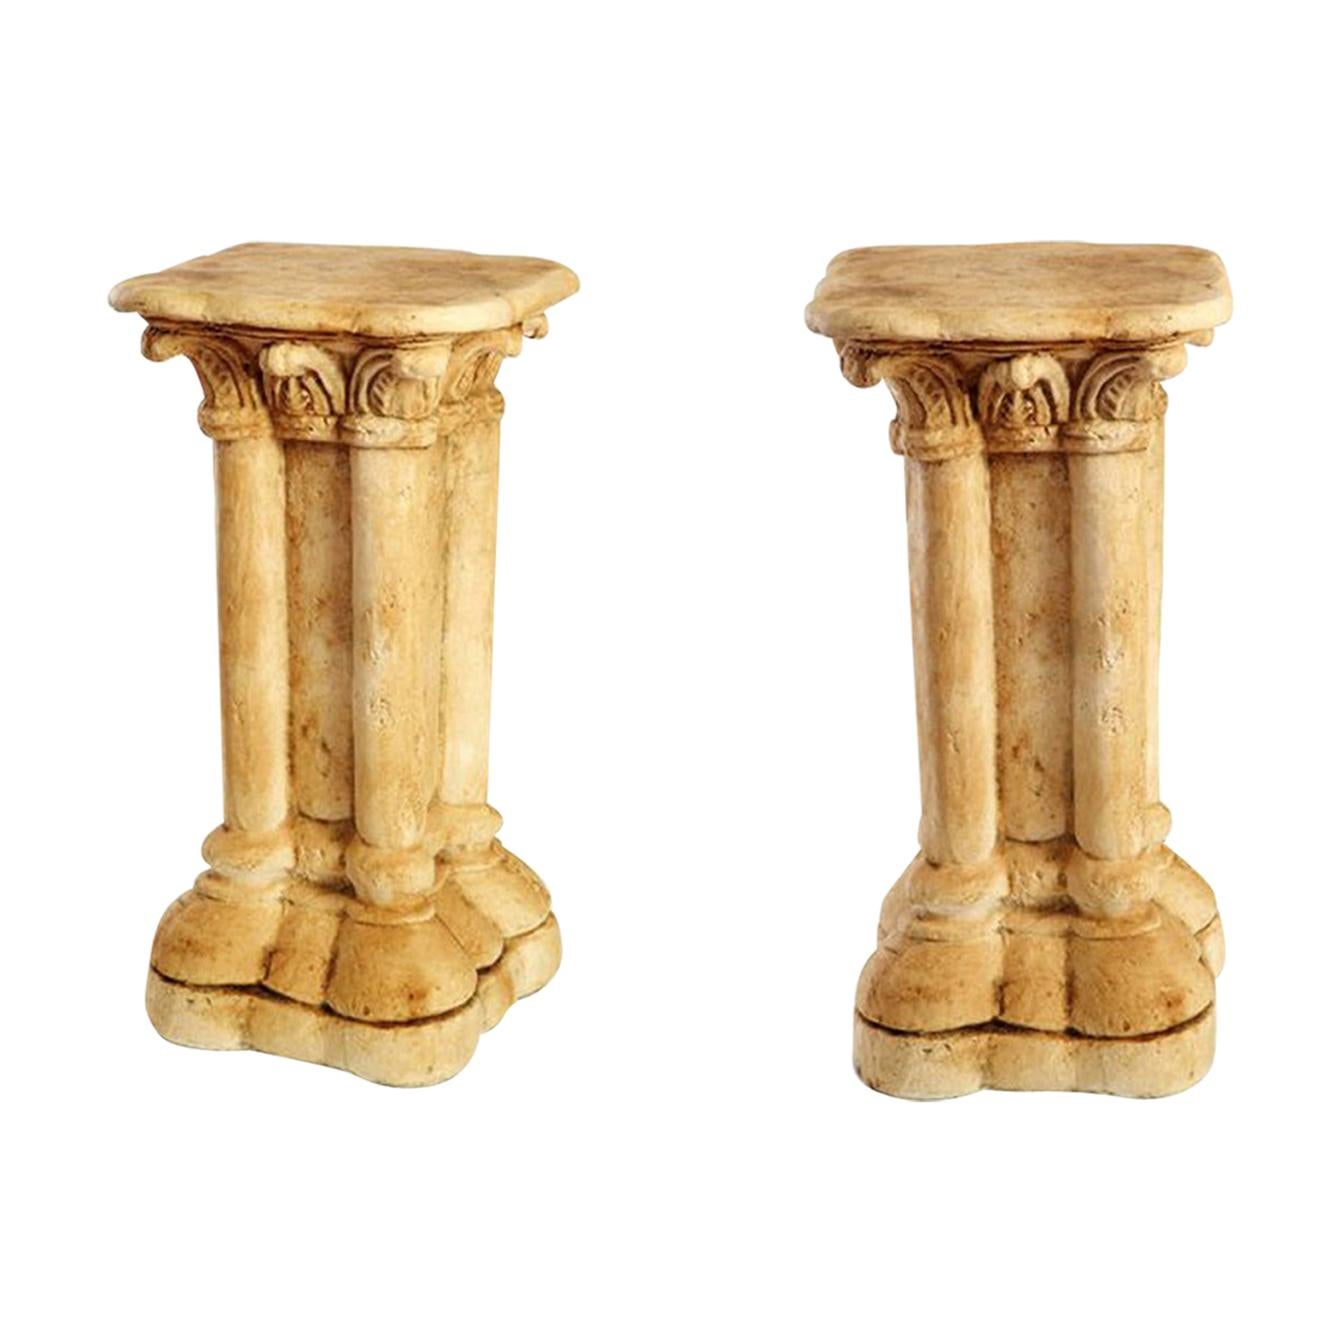 Pair of Italian Renaissance Style Pedestals